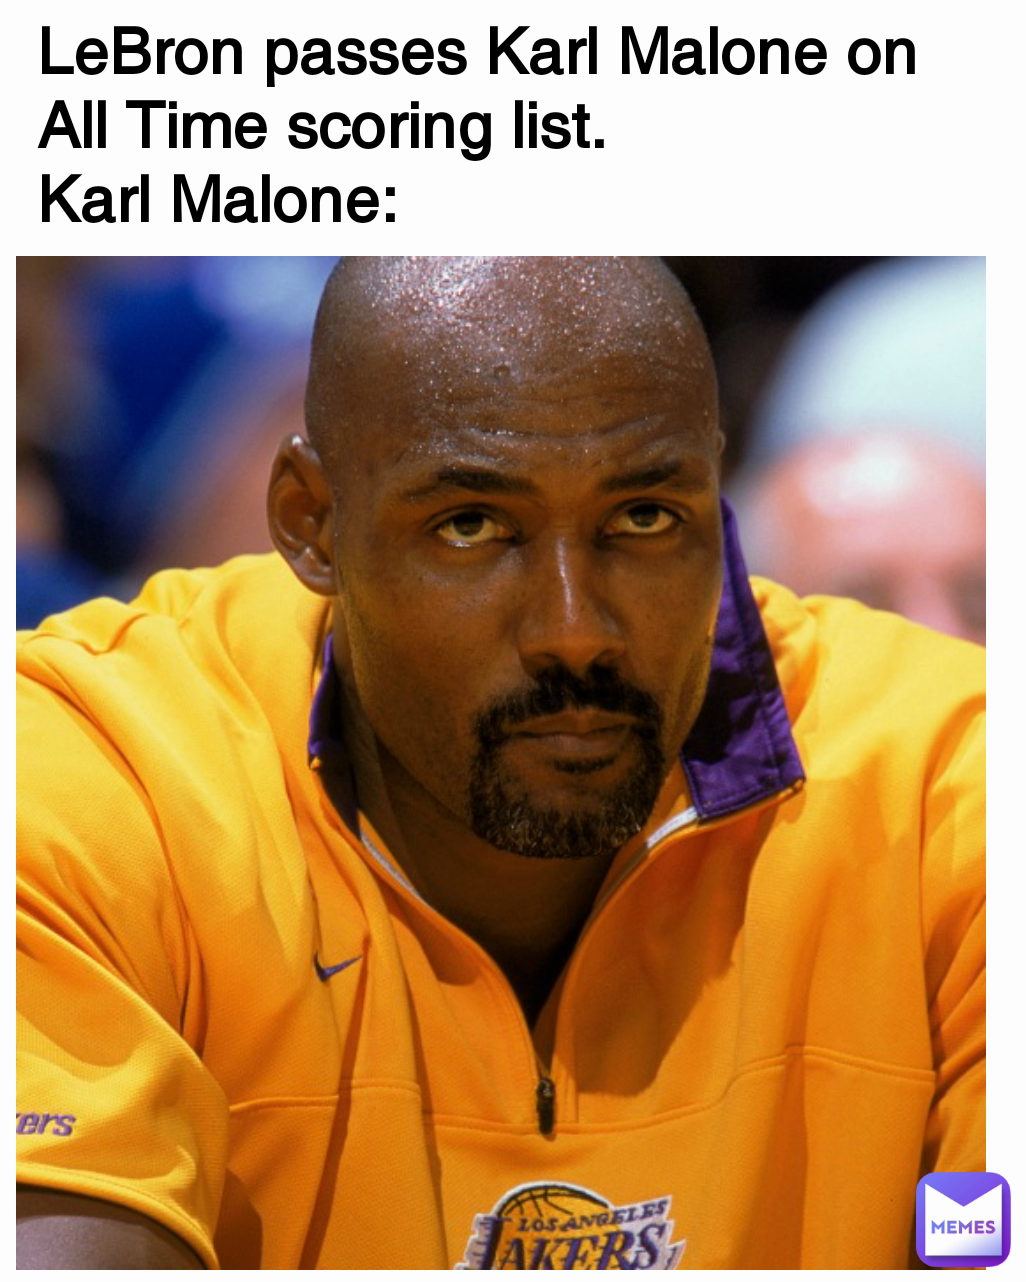 LeBron passes Karl Malone on All Time scoring list.
Karl Malone: